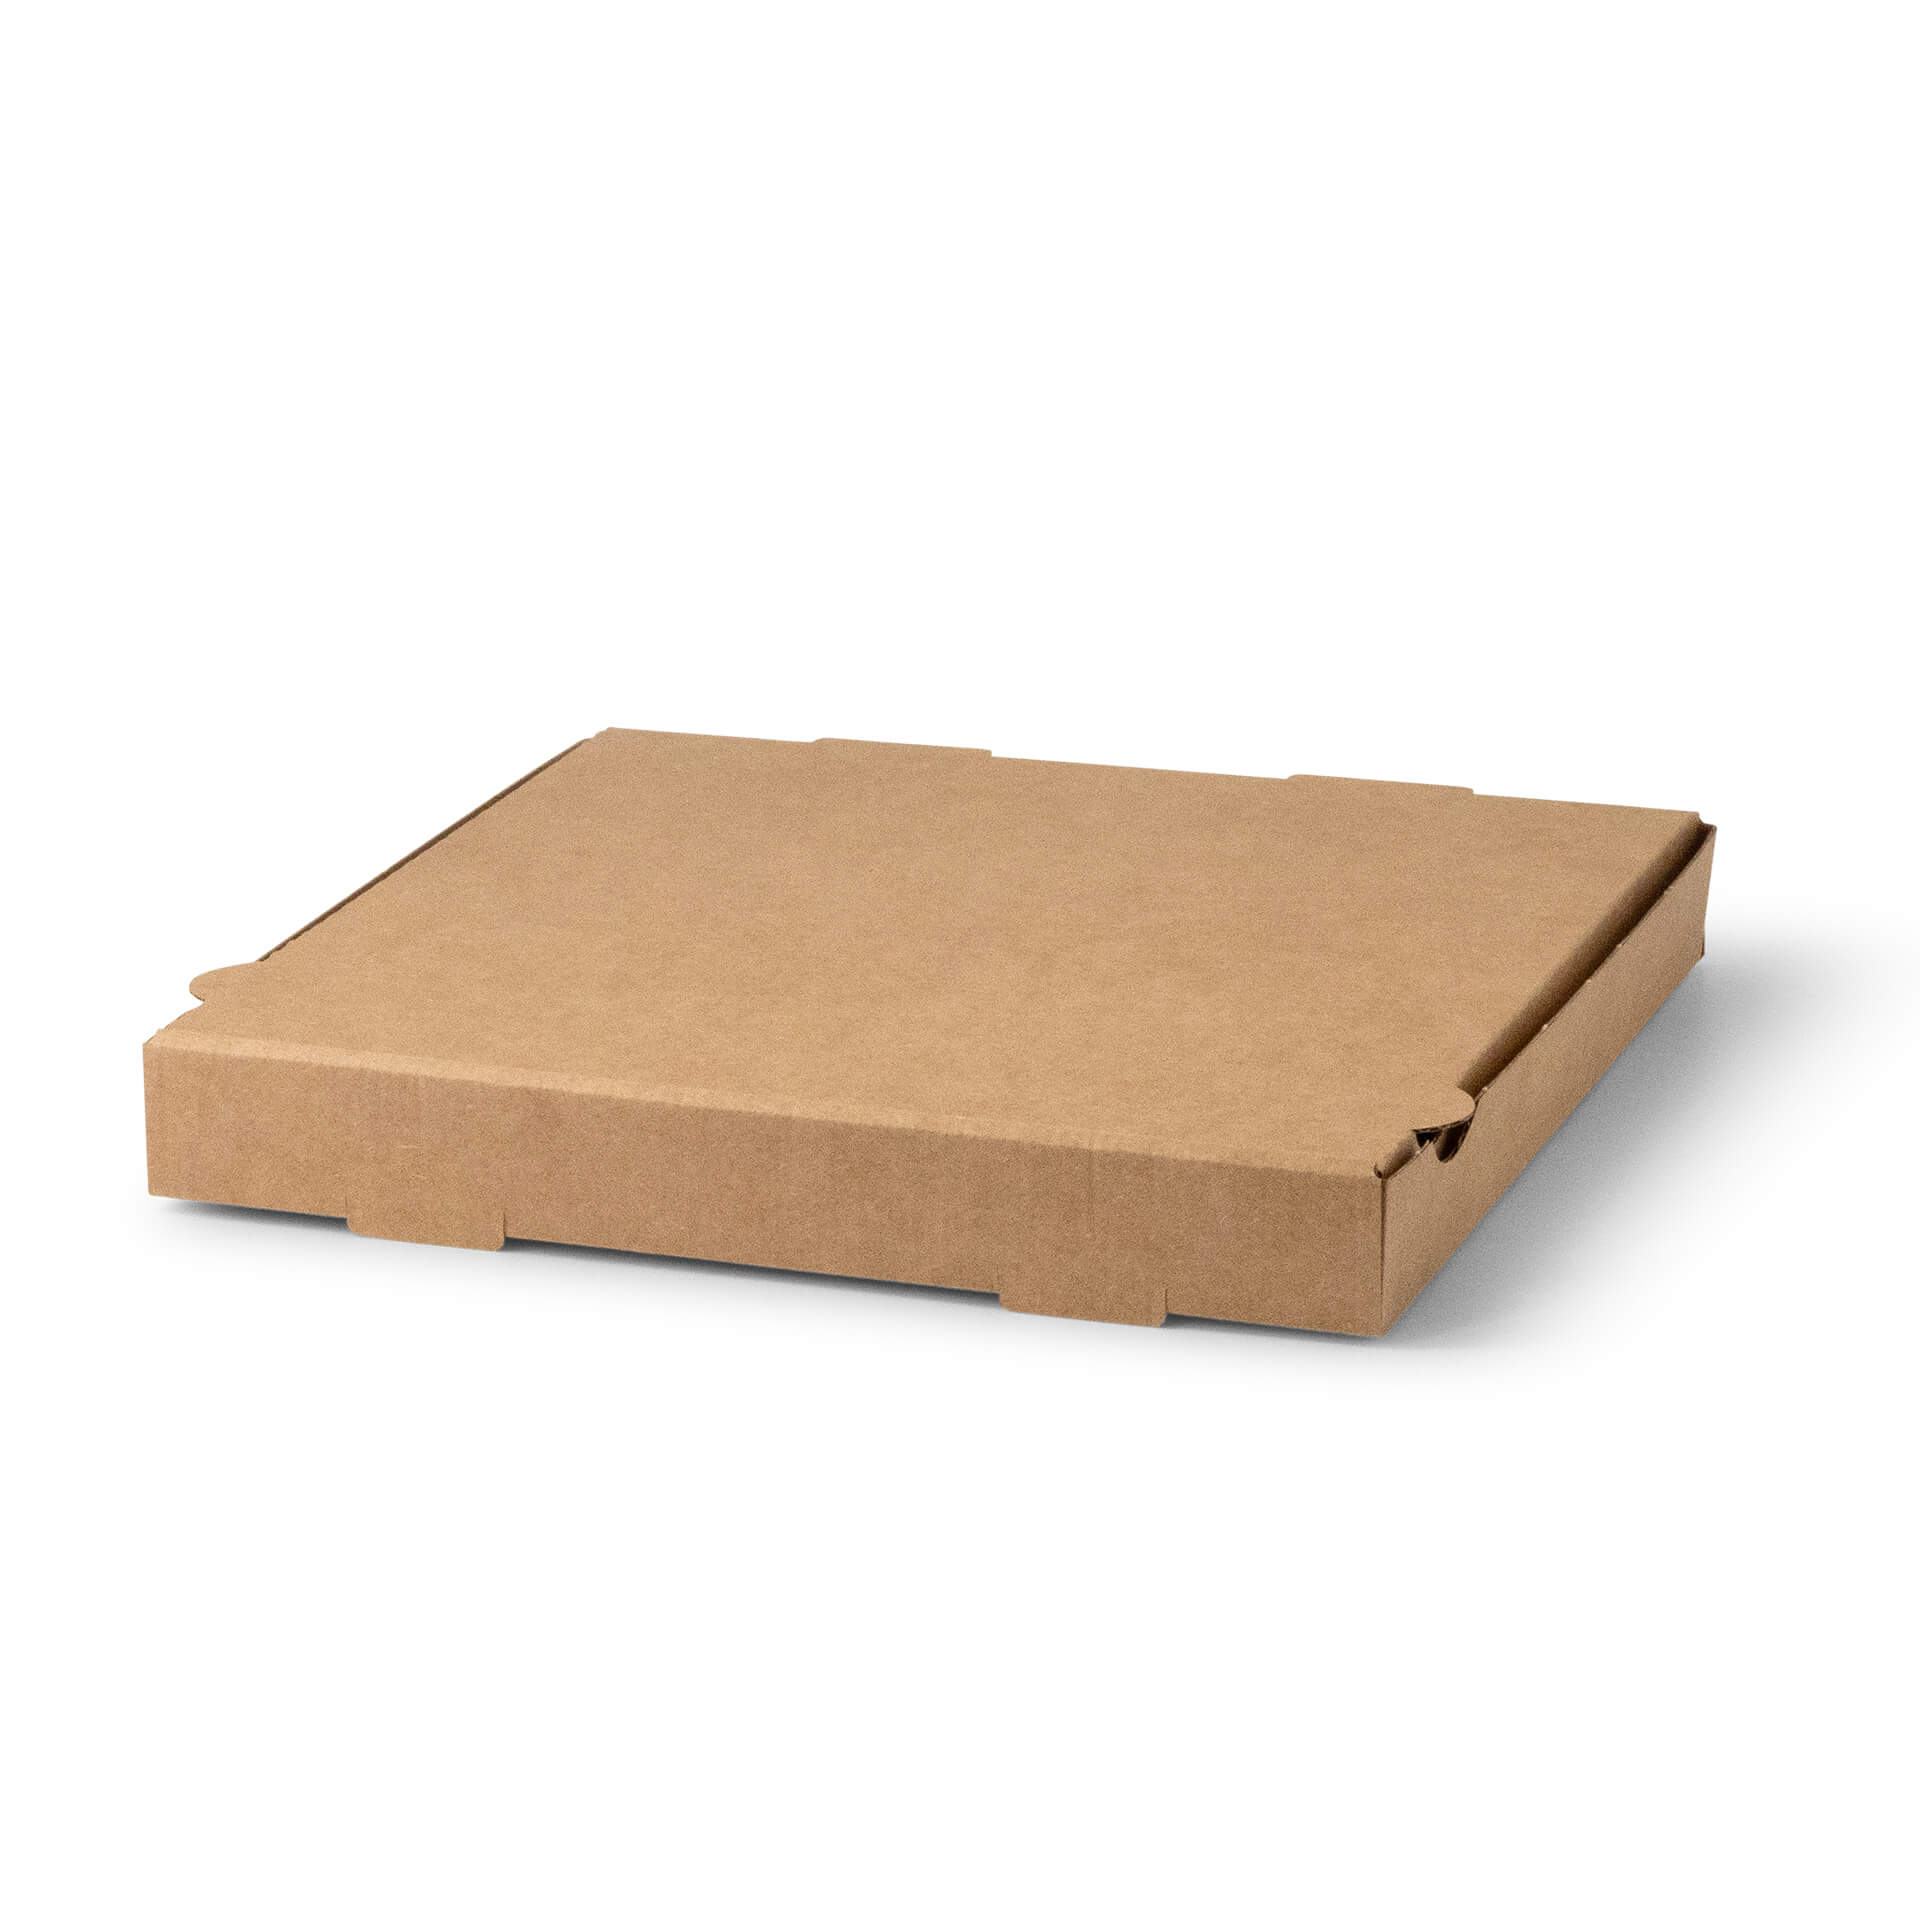 Pizzakartons Ø 30 cm, braun